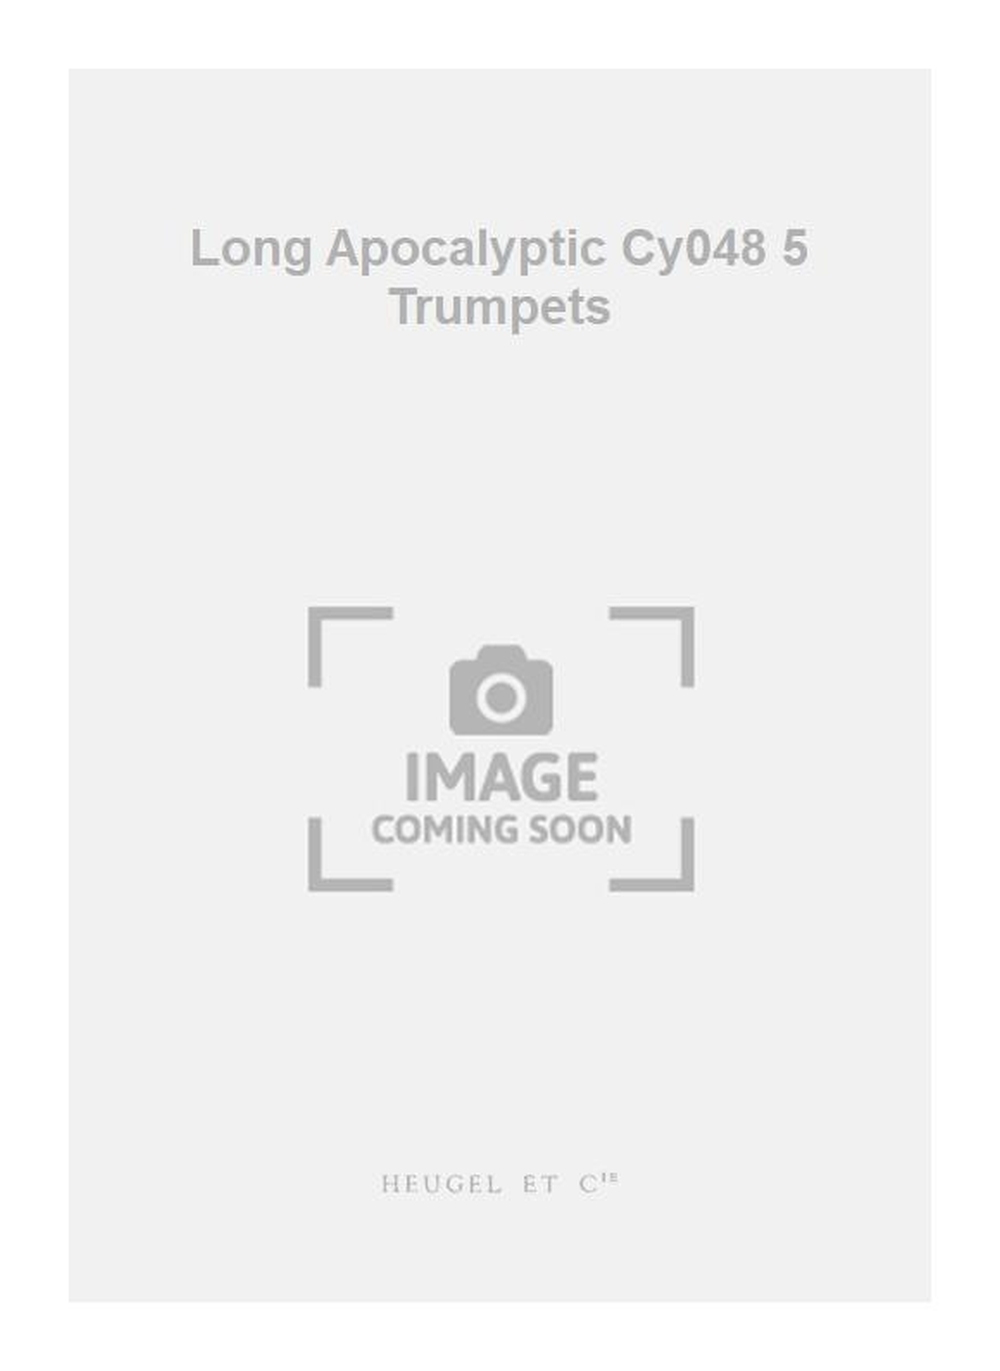 Richard Long: Long Apocalyptic Cy048 5 Trumpets